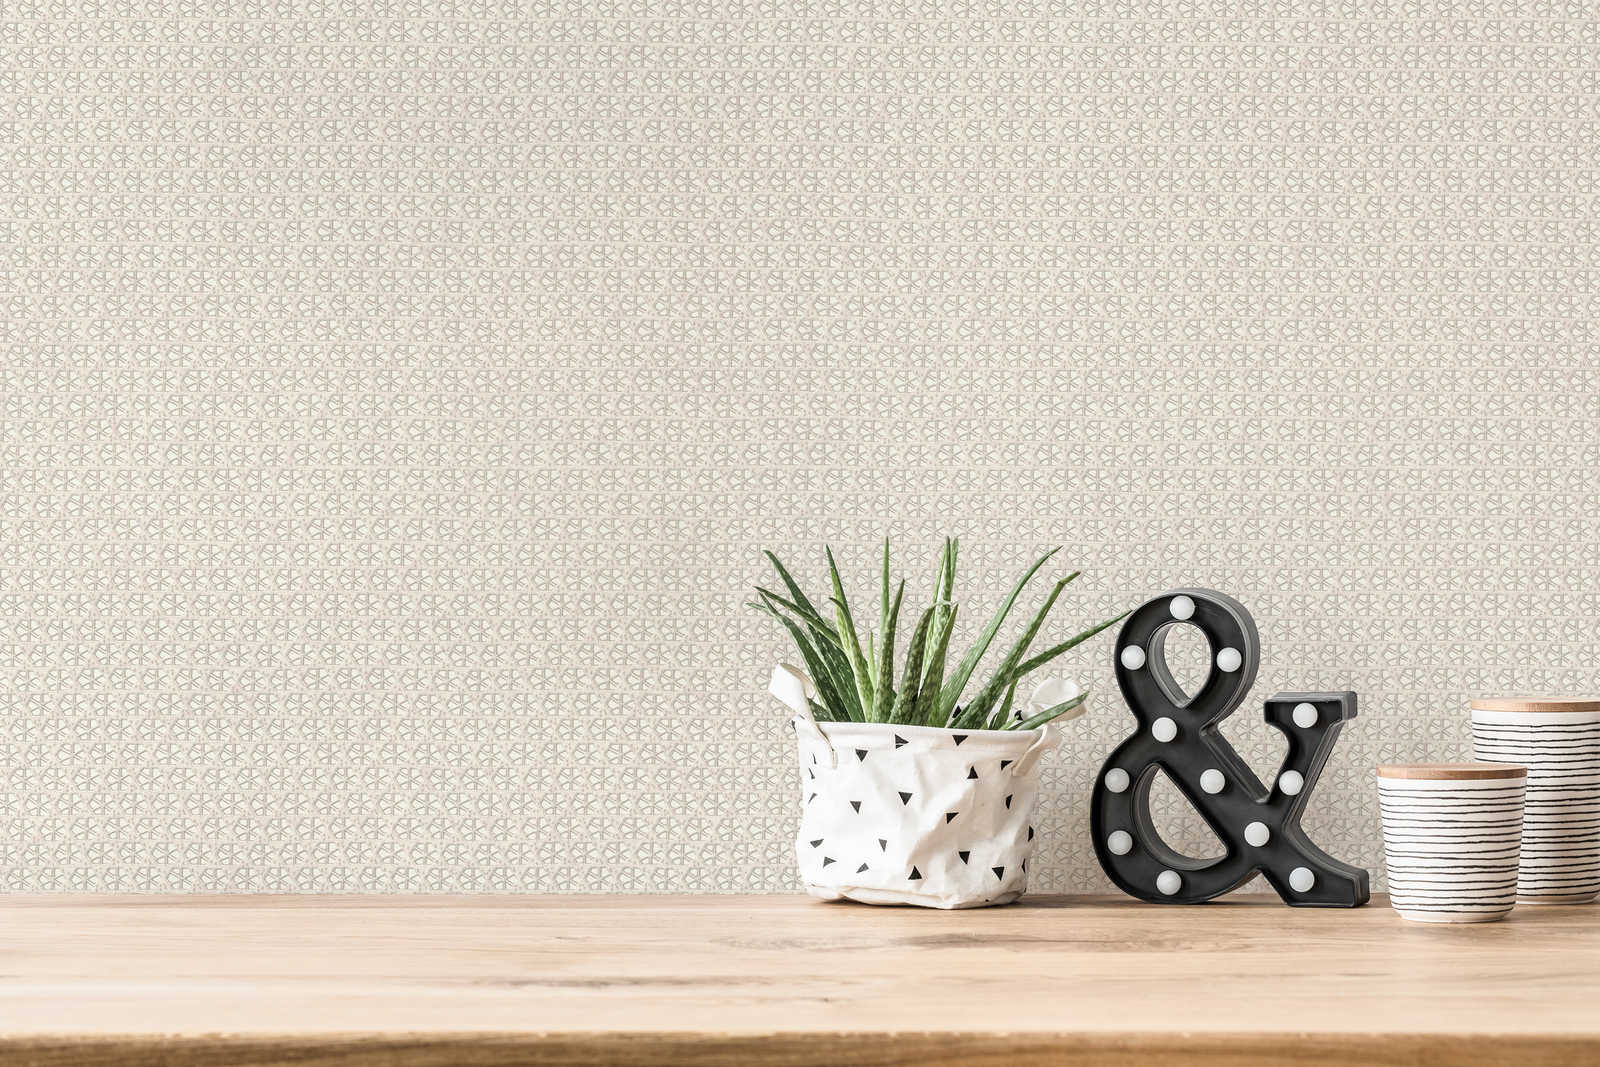             Wallpaper rattan pattern in Japandi style - grey, white
        